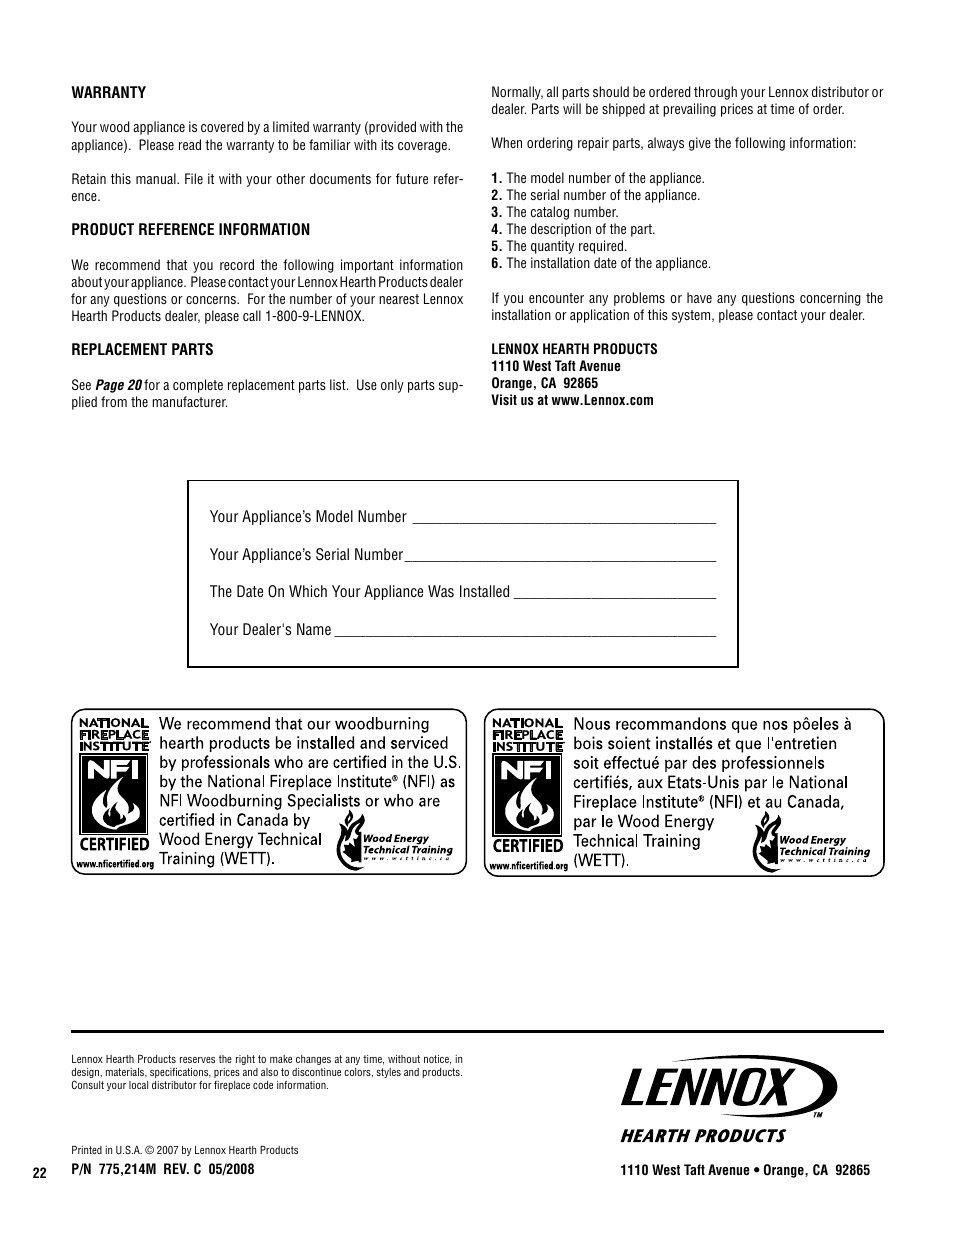 LG MODEL STRIKER S160 User Manual | Page 22 / 22